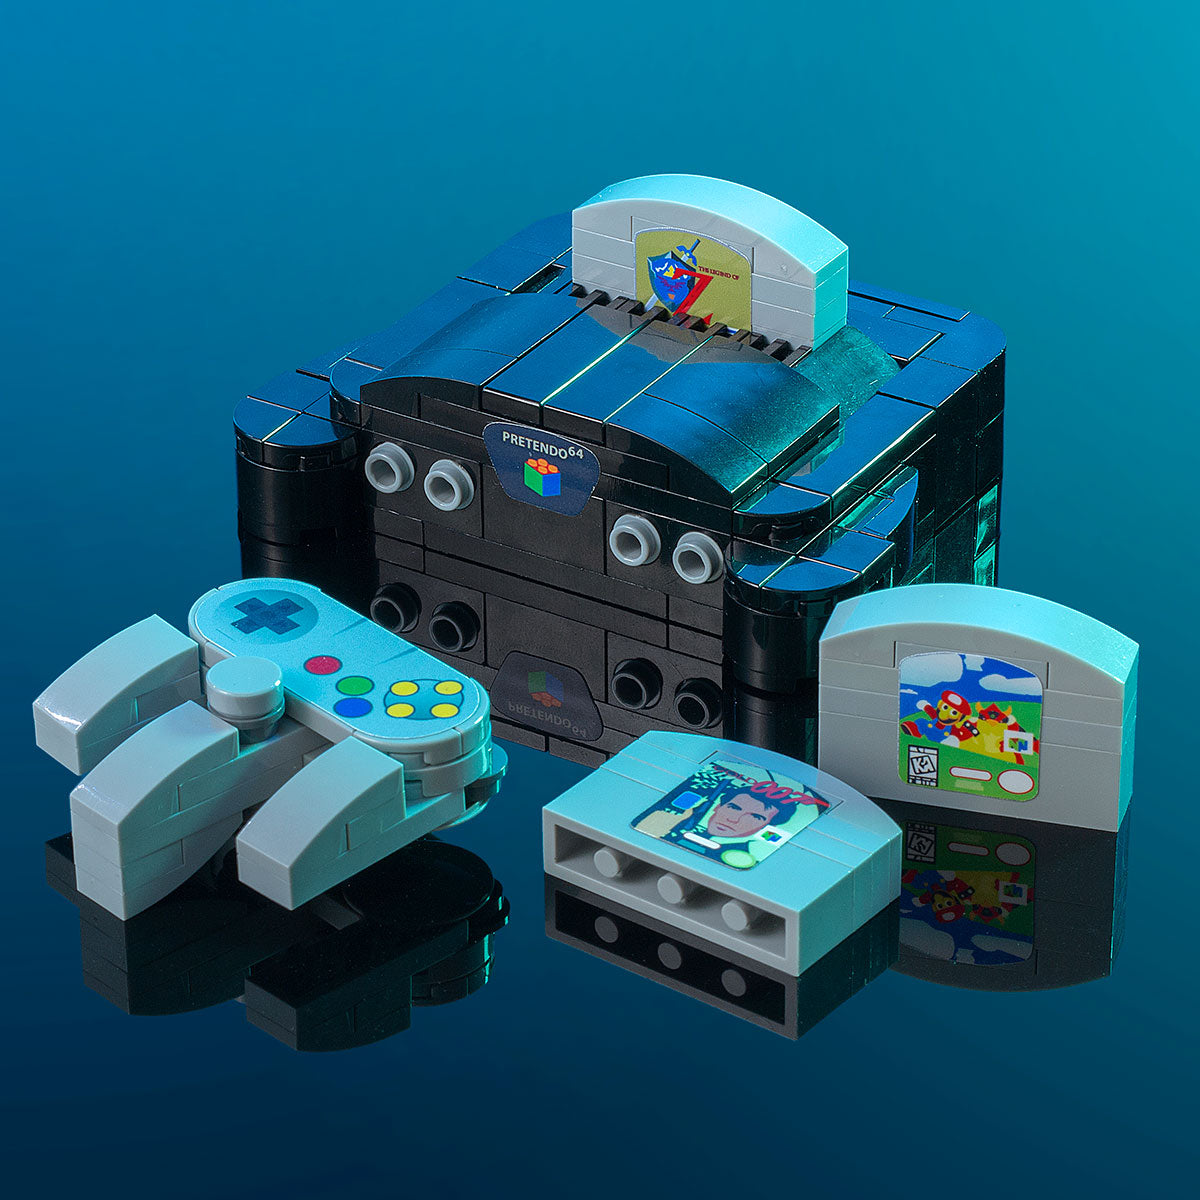 Custom LEGO N64 Video Game Console